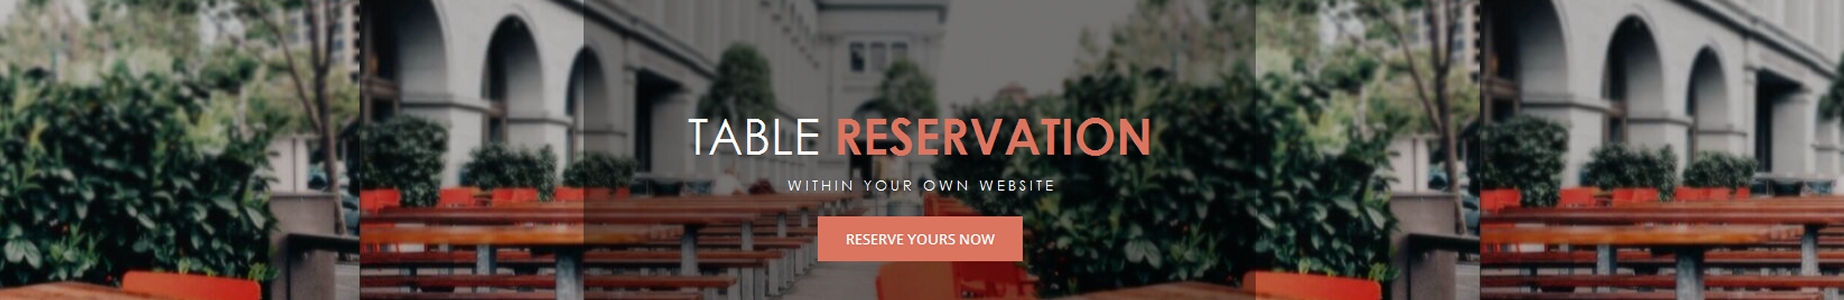 Restaurant table reservation software